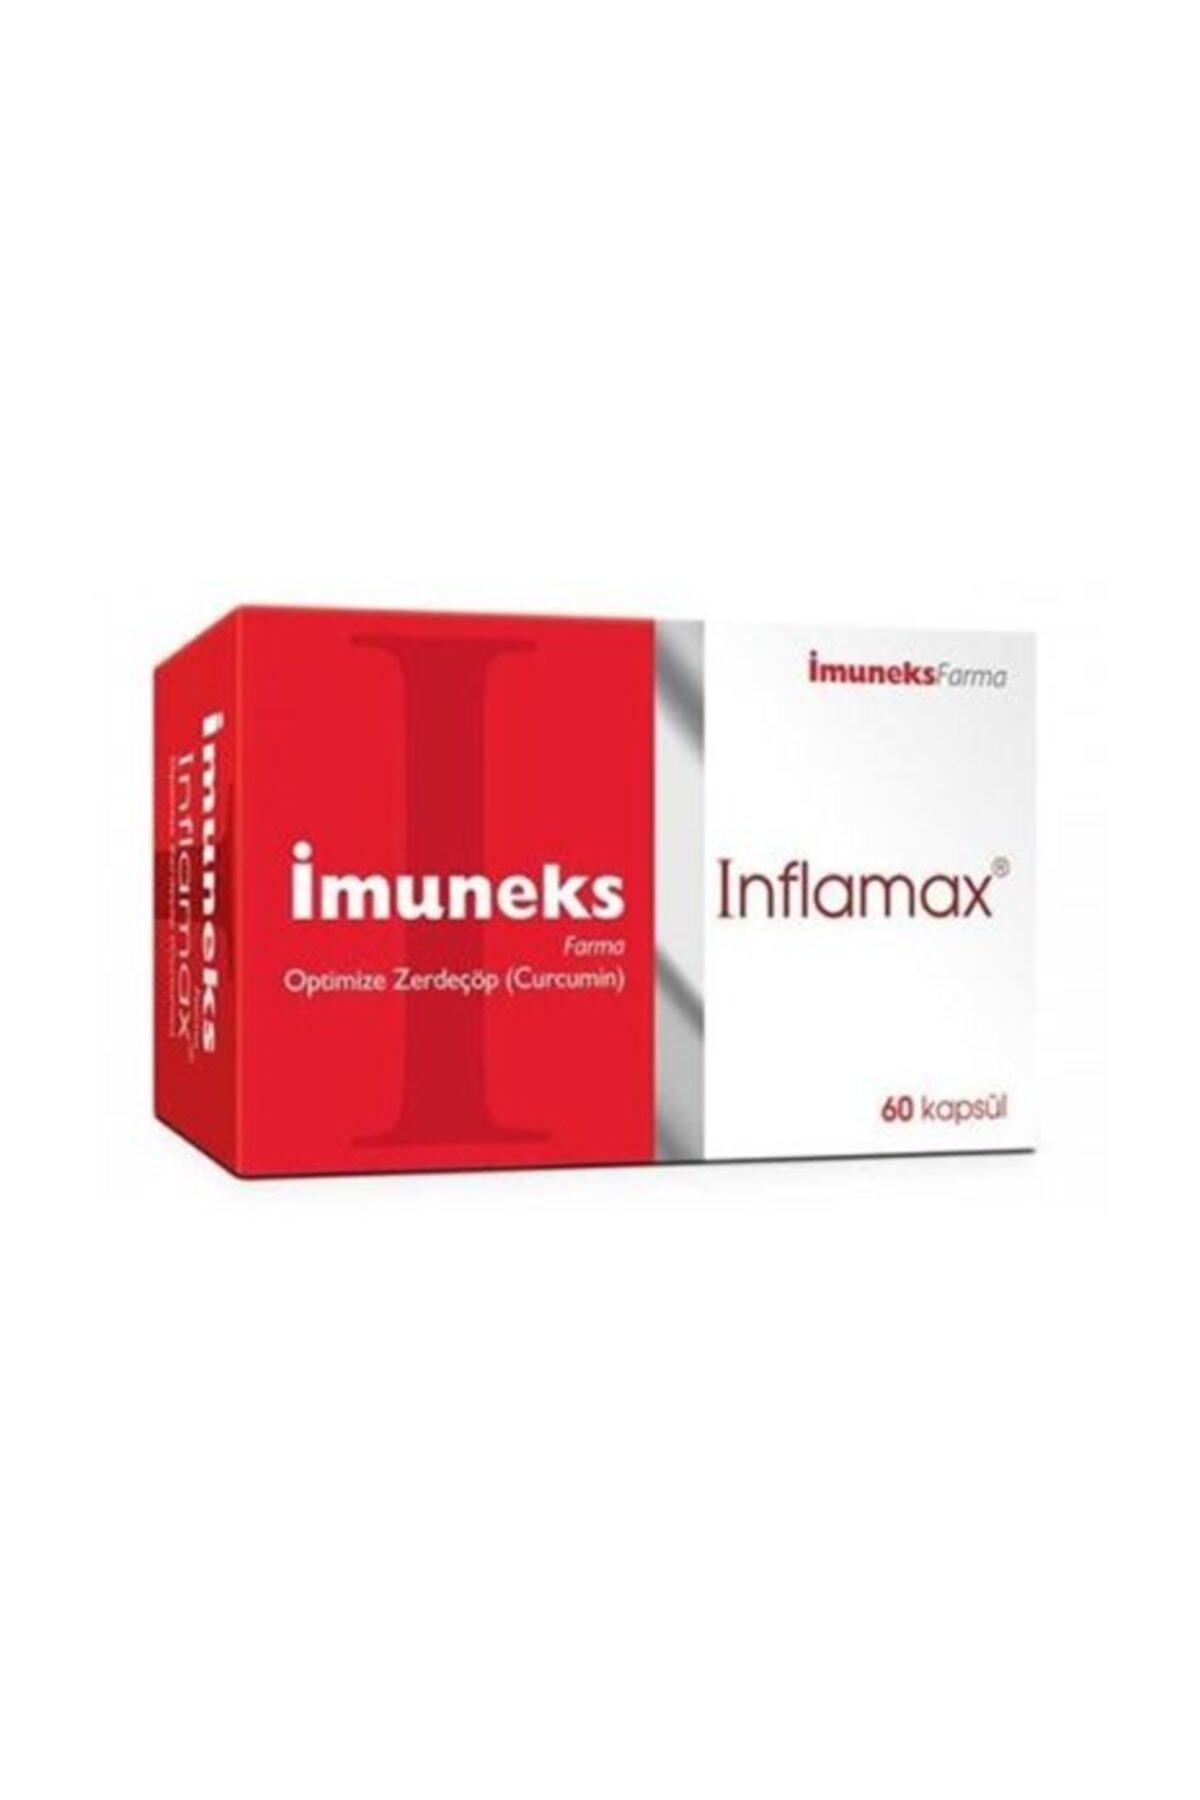 Imuneks Inflamax Optimize Zerdeçöp 60 Kapsül